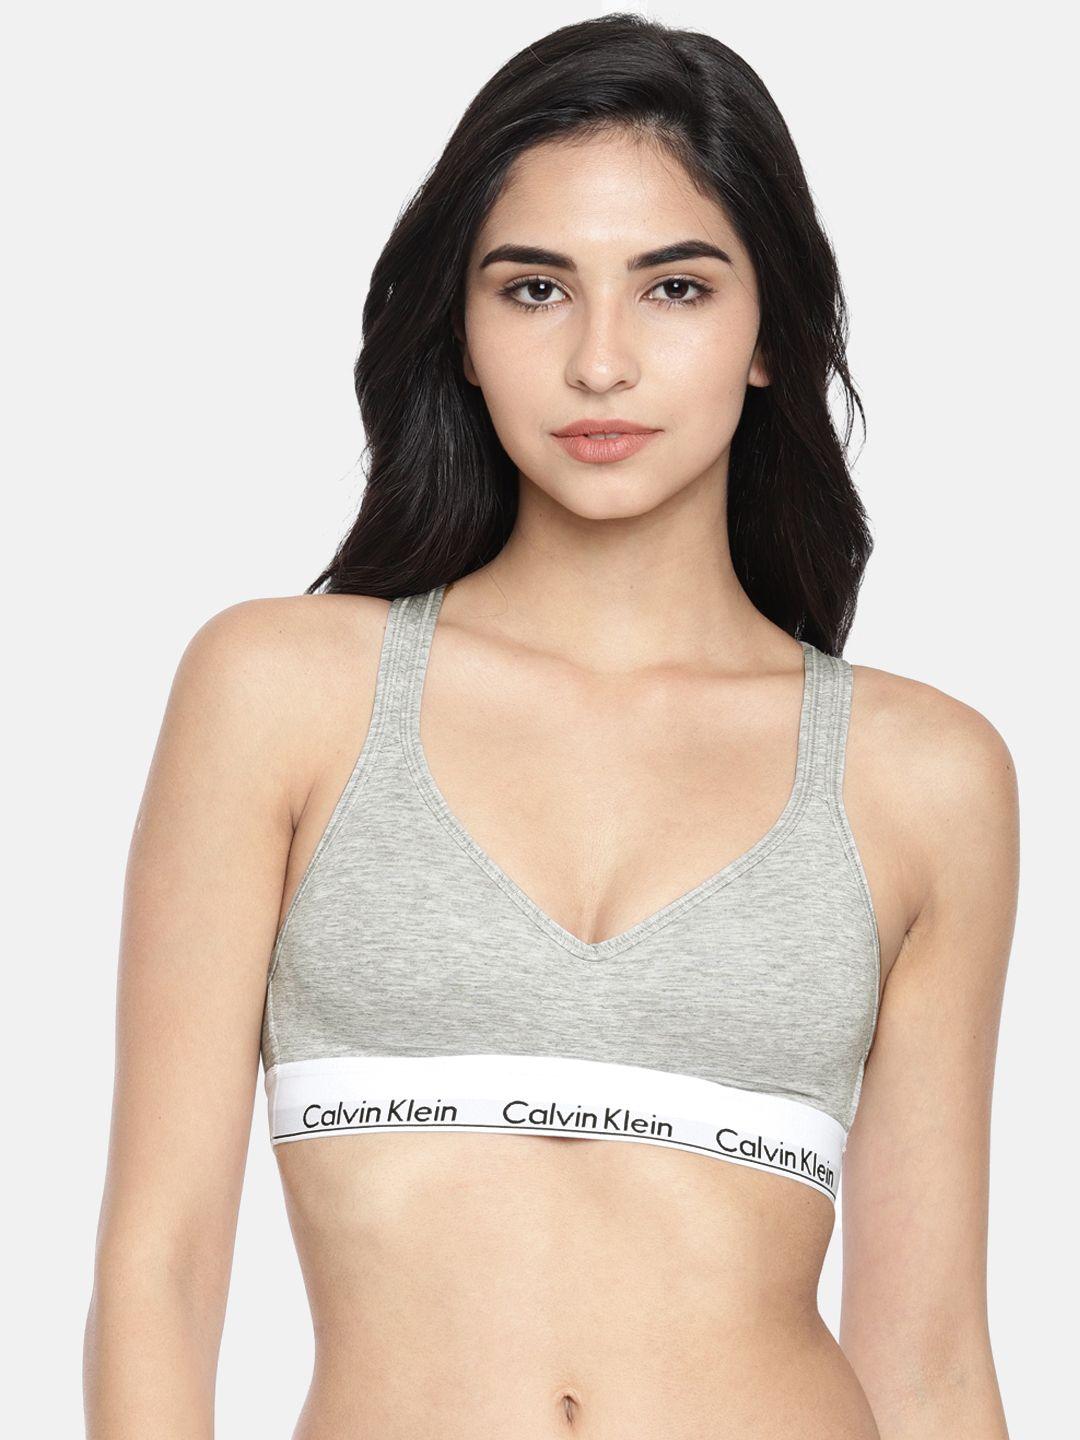 calvin klein underwear modern cotton collection grey solid non-wired lightly padded sports bra qf1654020